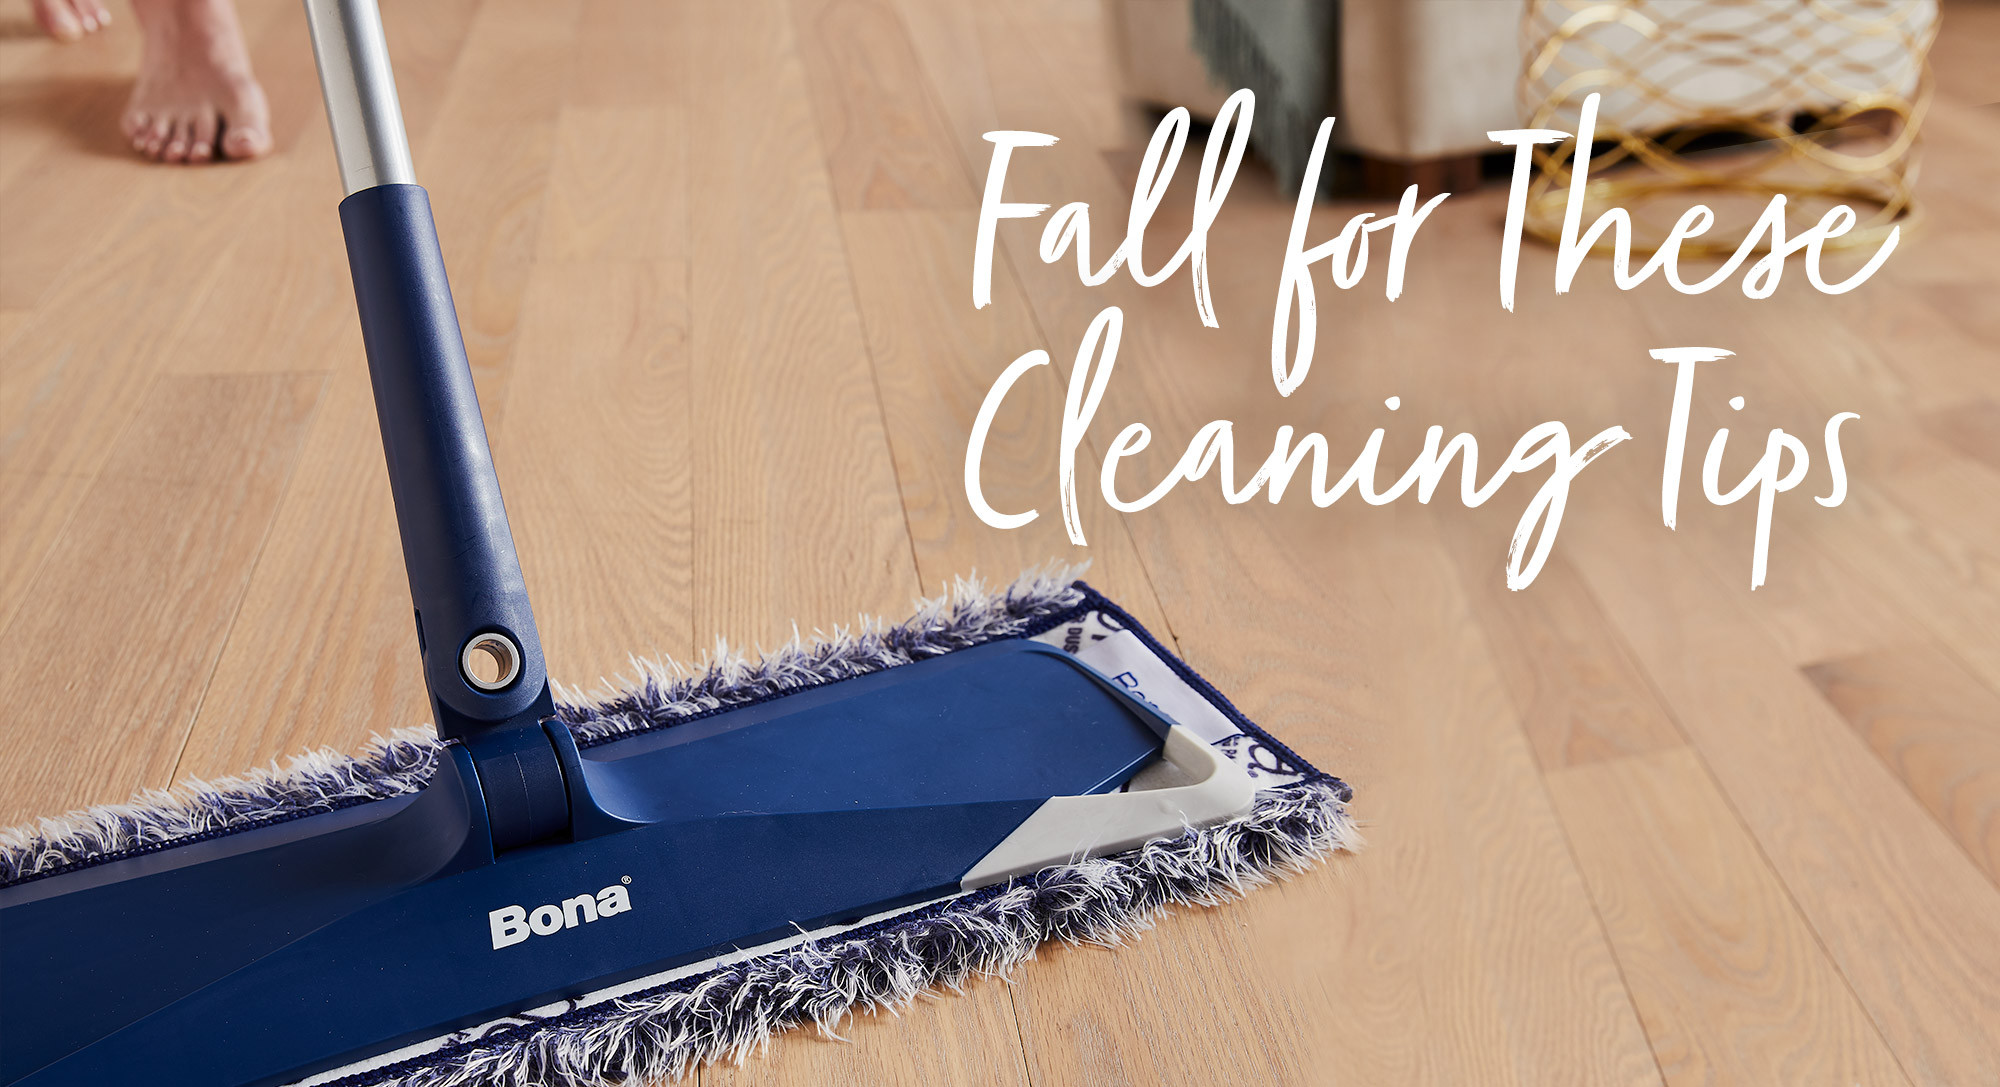 bona hardwood floor spray mop kit of home bona us regarding fall feature2